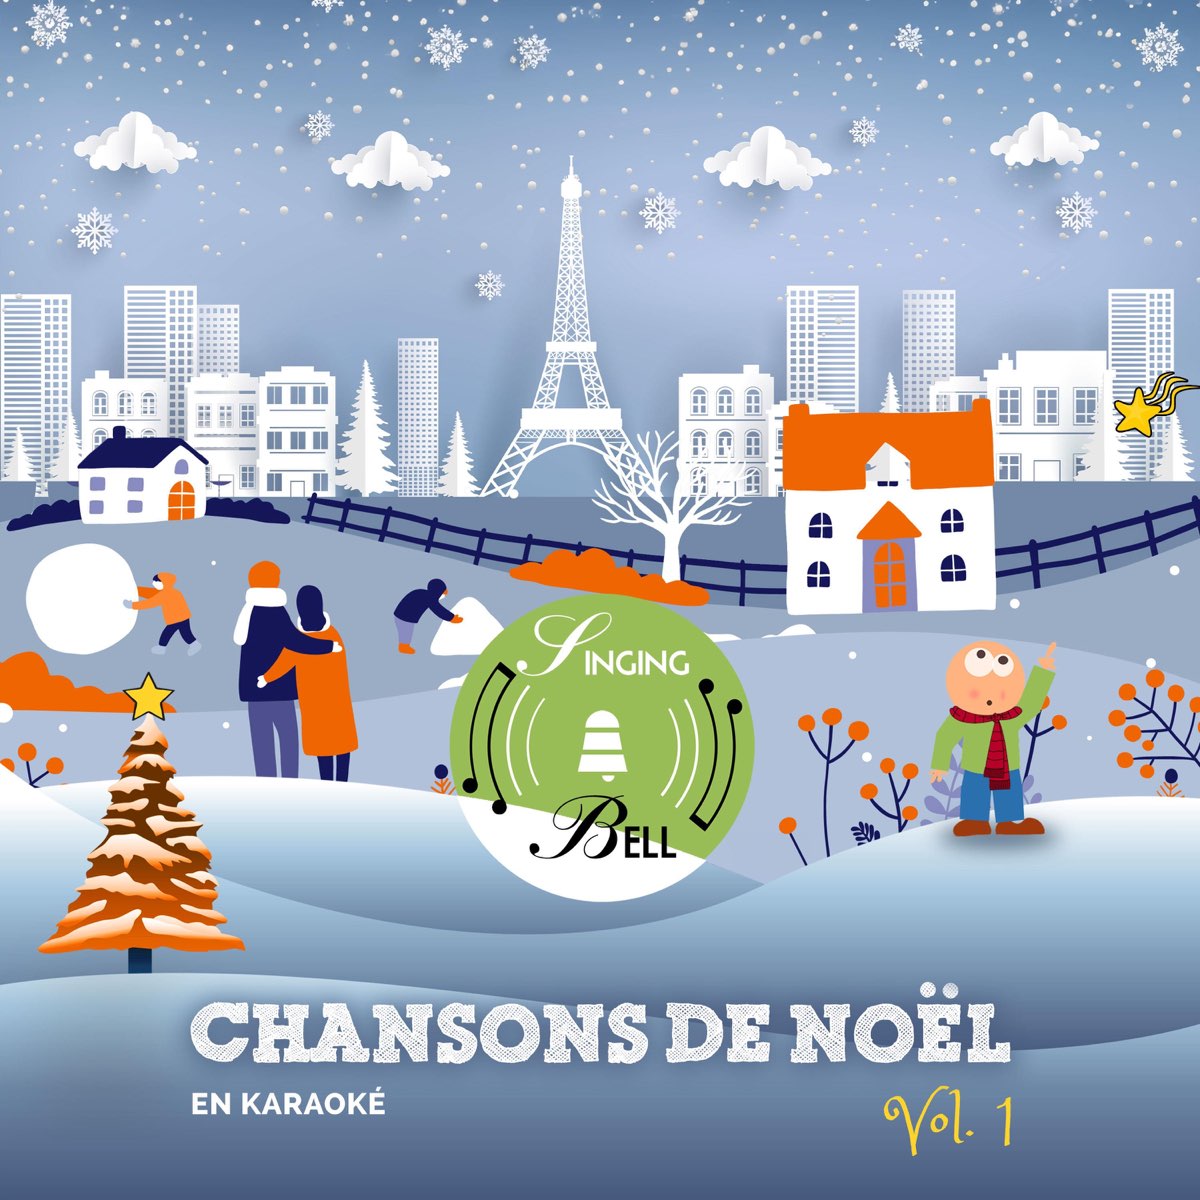 Chansons de Noël en Karaoké Vol. 1 - Album by Singing Bell - Apple Music